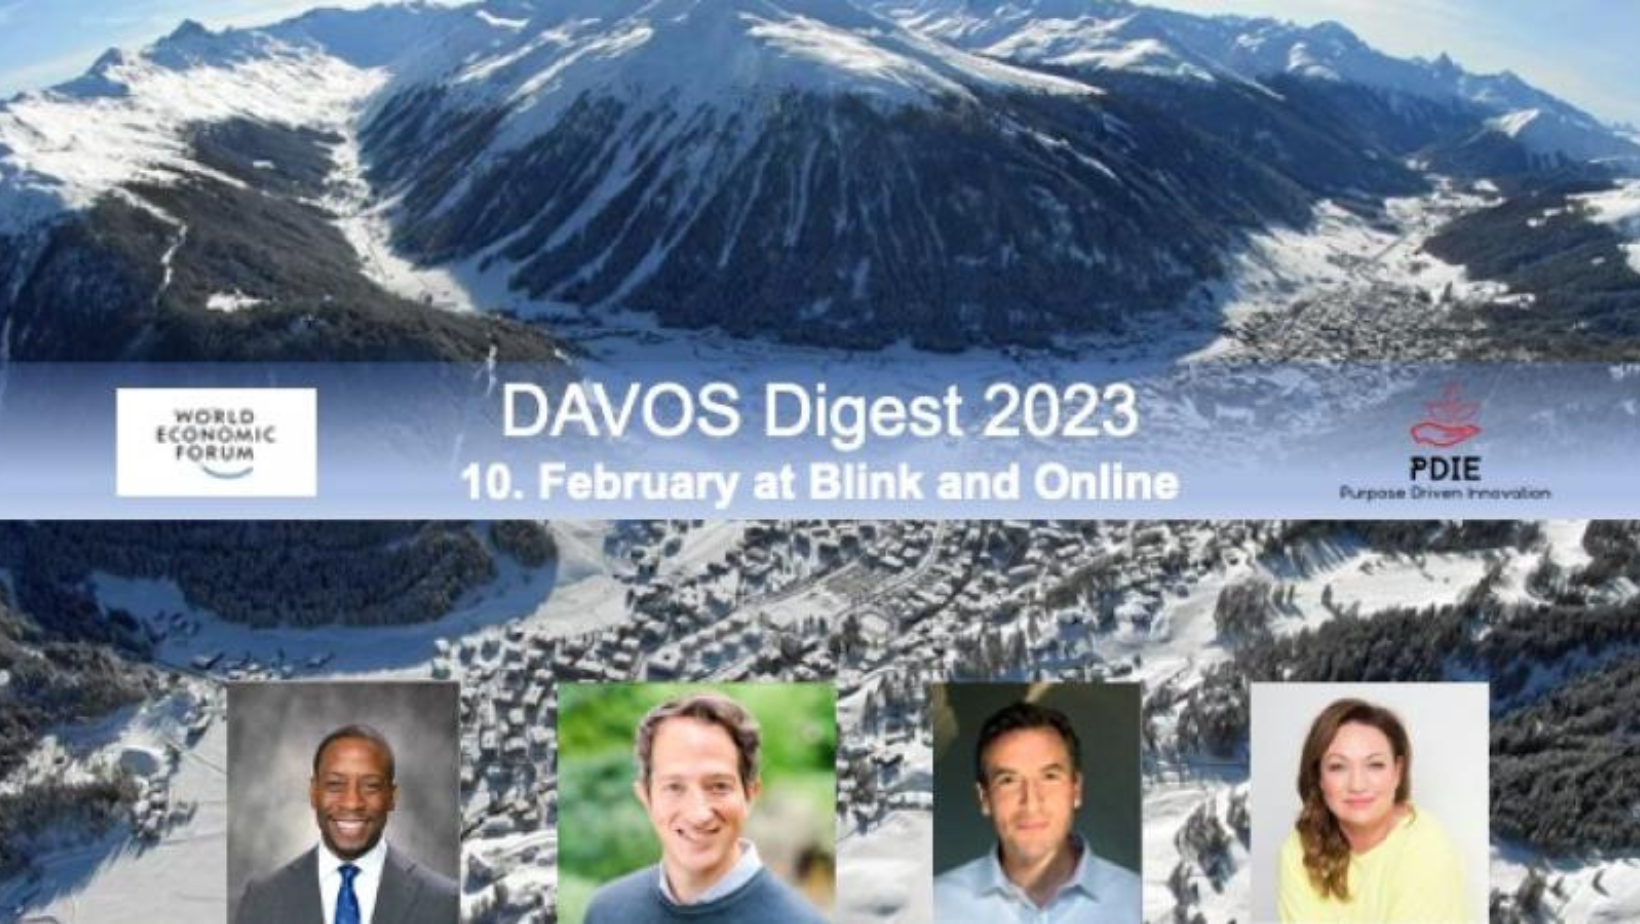 DAVOS DIGES 2023 – World Economic Forum Highlights!